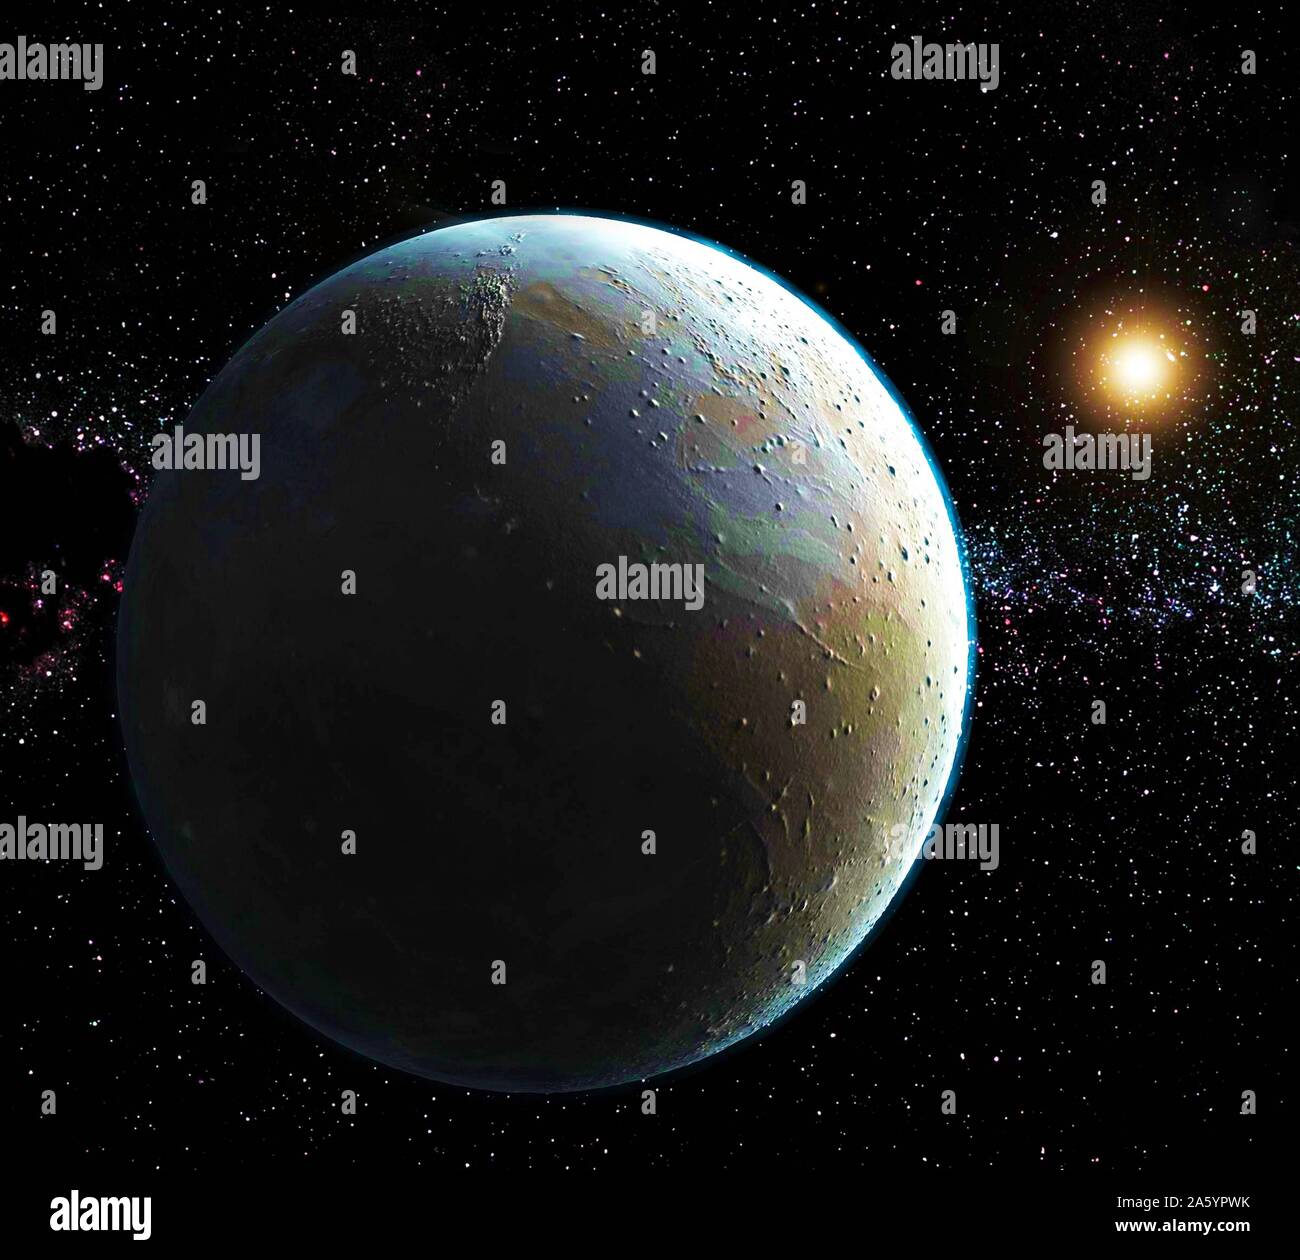 View of Pluto, artist's impression based on 2015 NASA image. Stock Photo